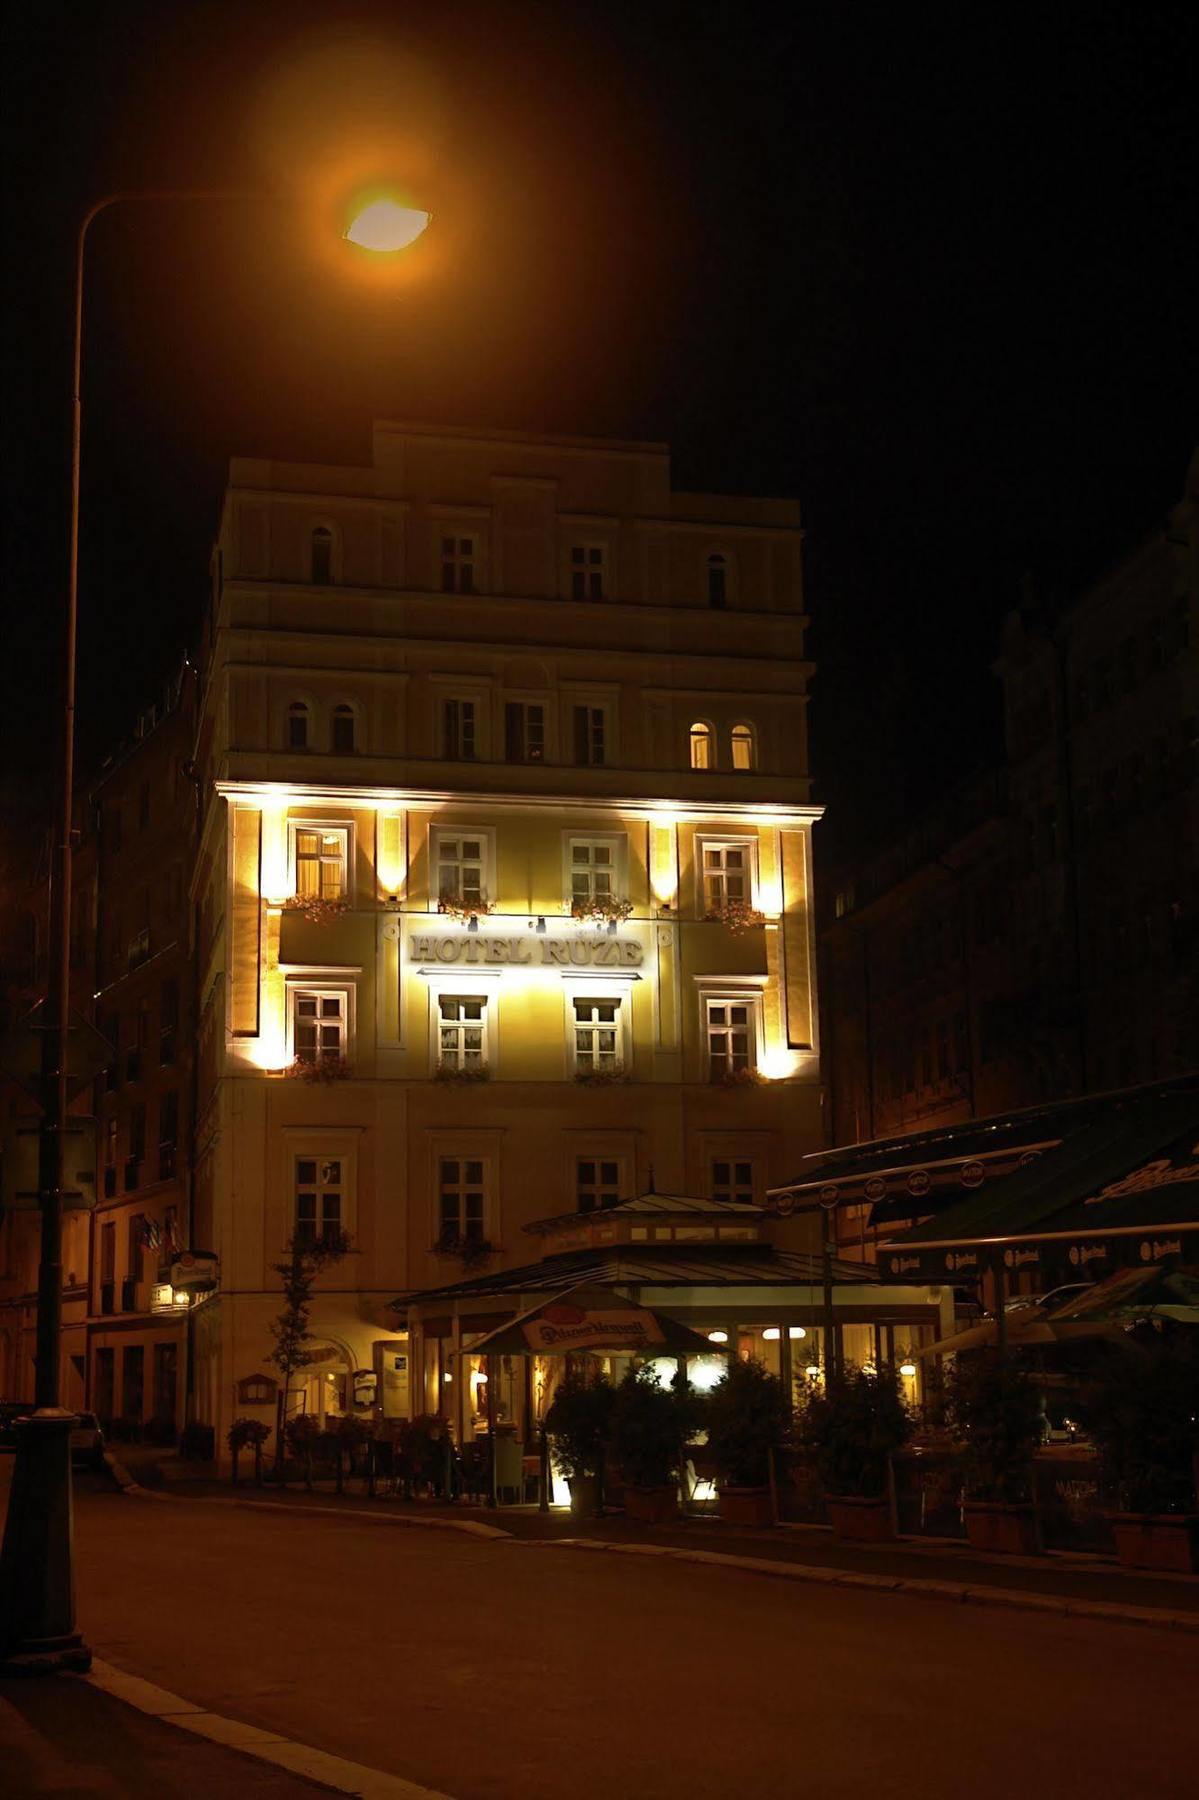 Hotel Ruze KLV Exterior foto